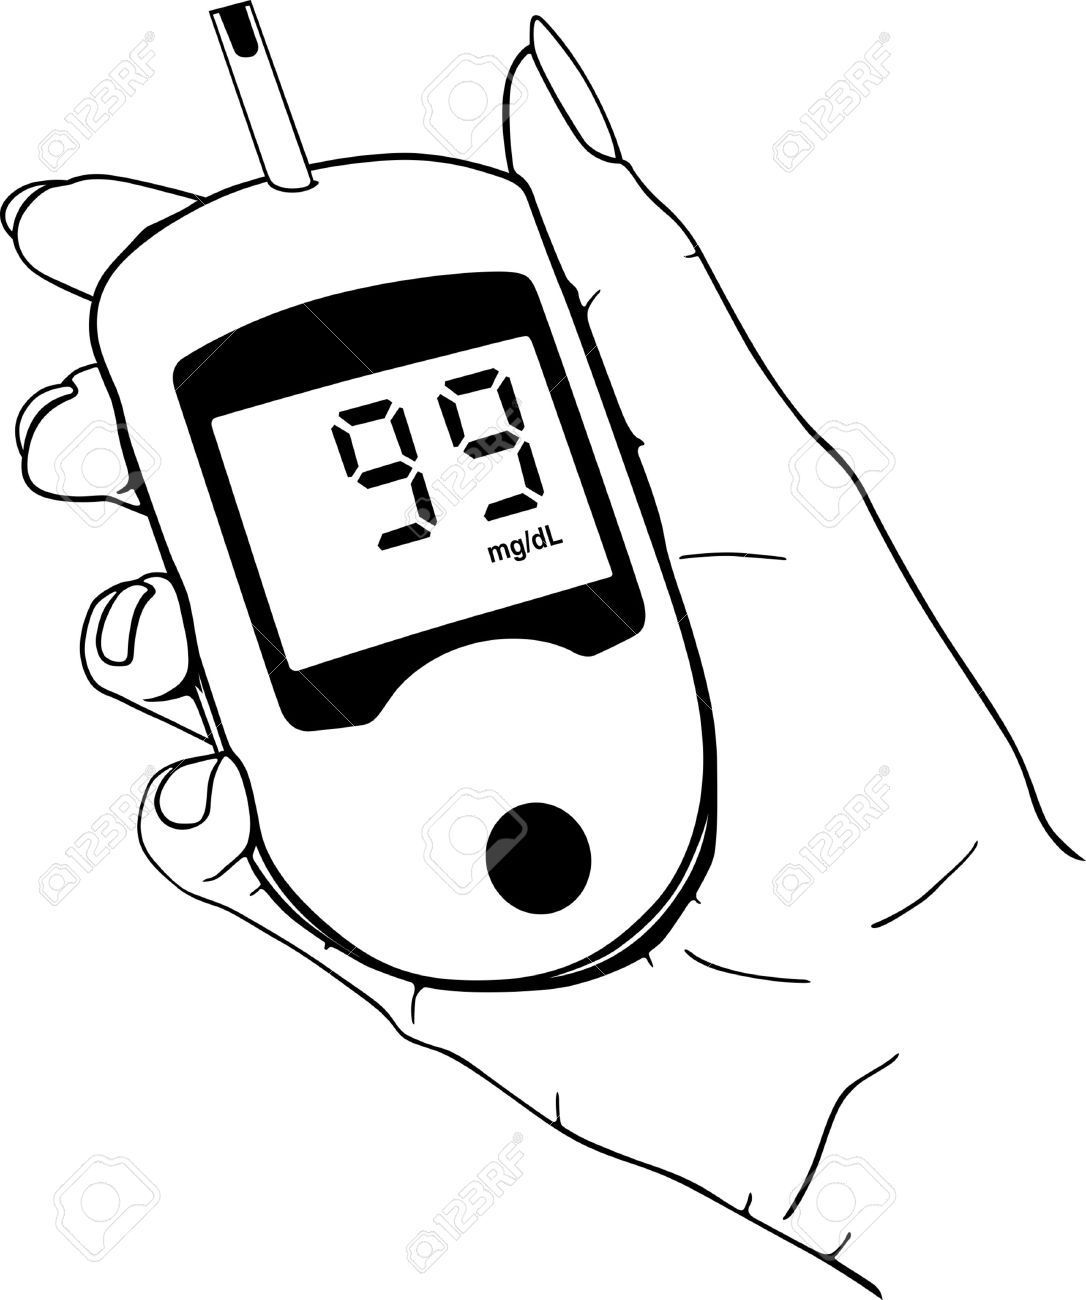 diabetes clipart - Diabetes Clip Art